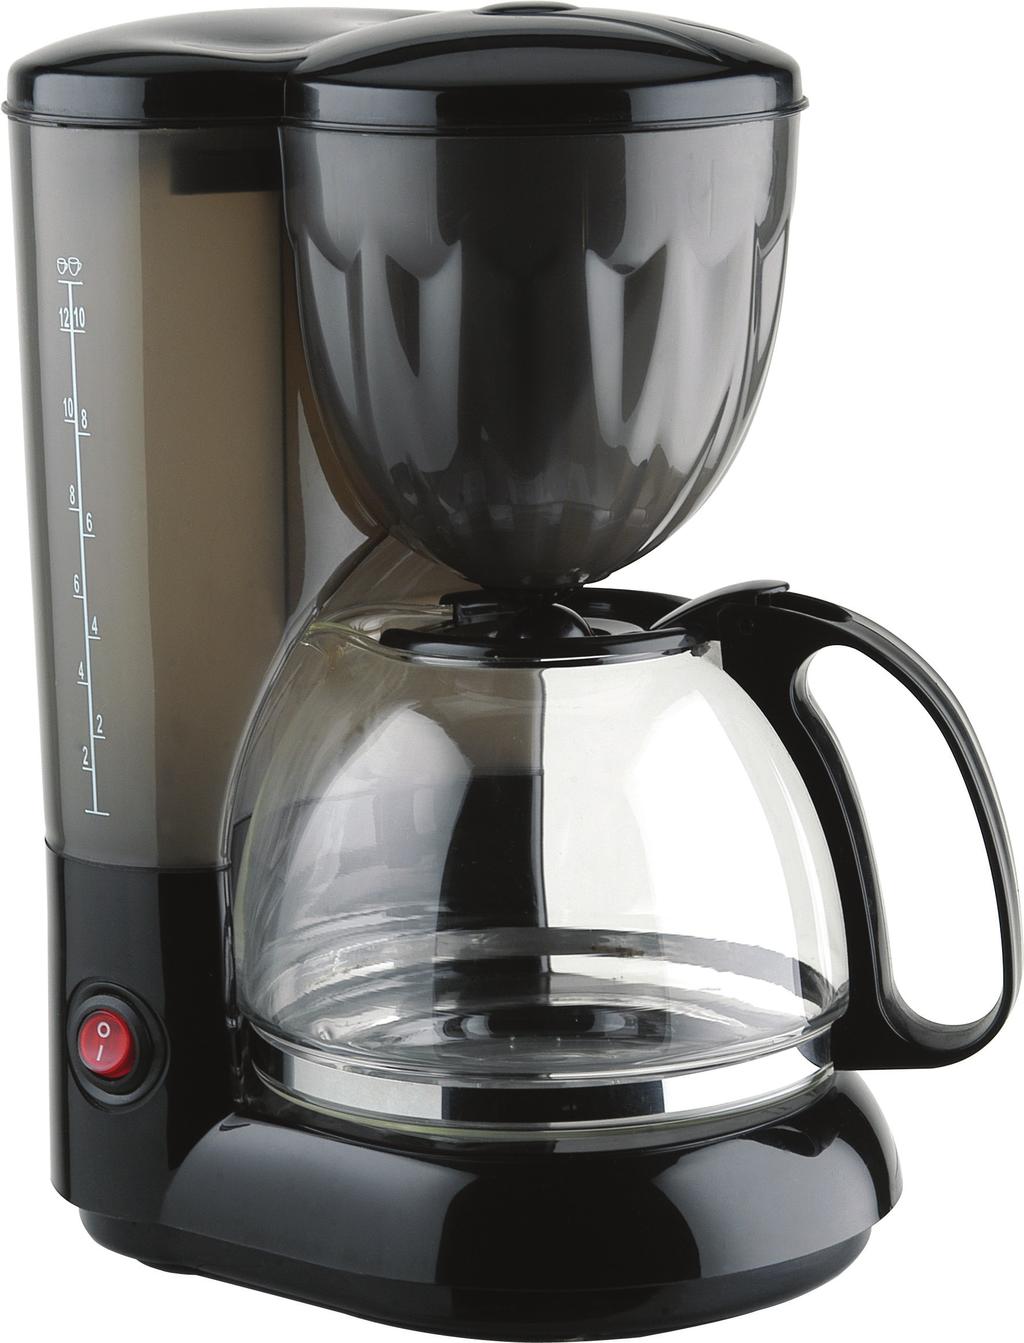 TRUCK COFFEE MAKER User s manual GB NL FR E